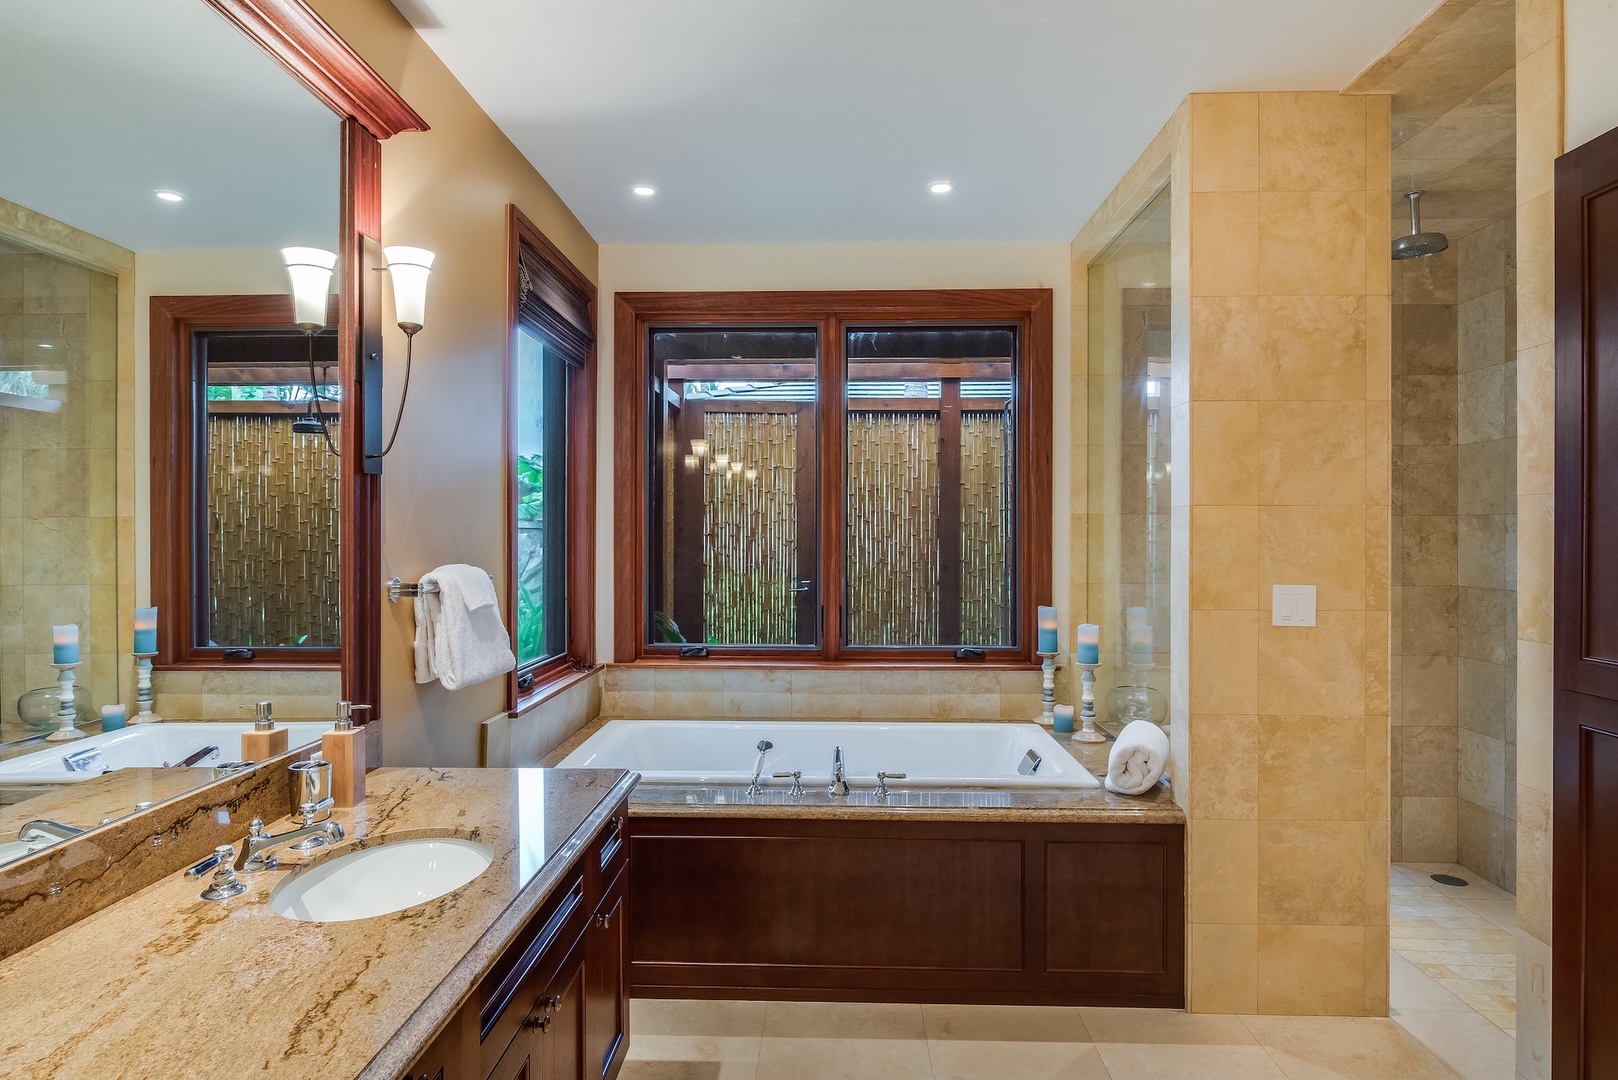 Kamuela Vacation Rentals, 3BD Ke Kailani (1C) at Mauna Lani Resort - Clse-Up of Downstairs Primary Bath w/ Soaking Tub and Windows to Bamboo Enclosed Outdoor Shower